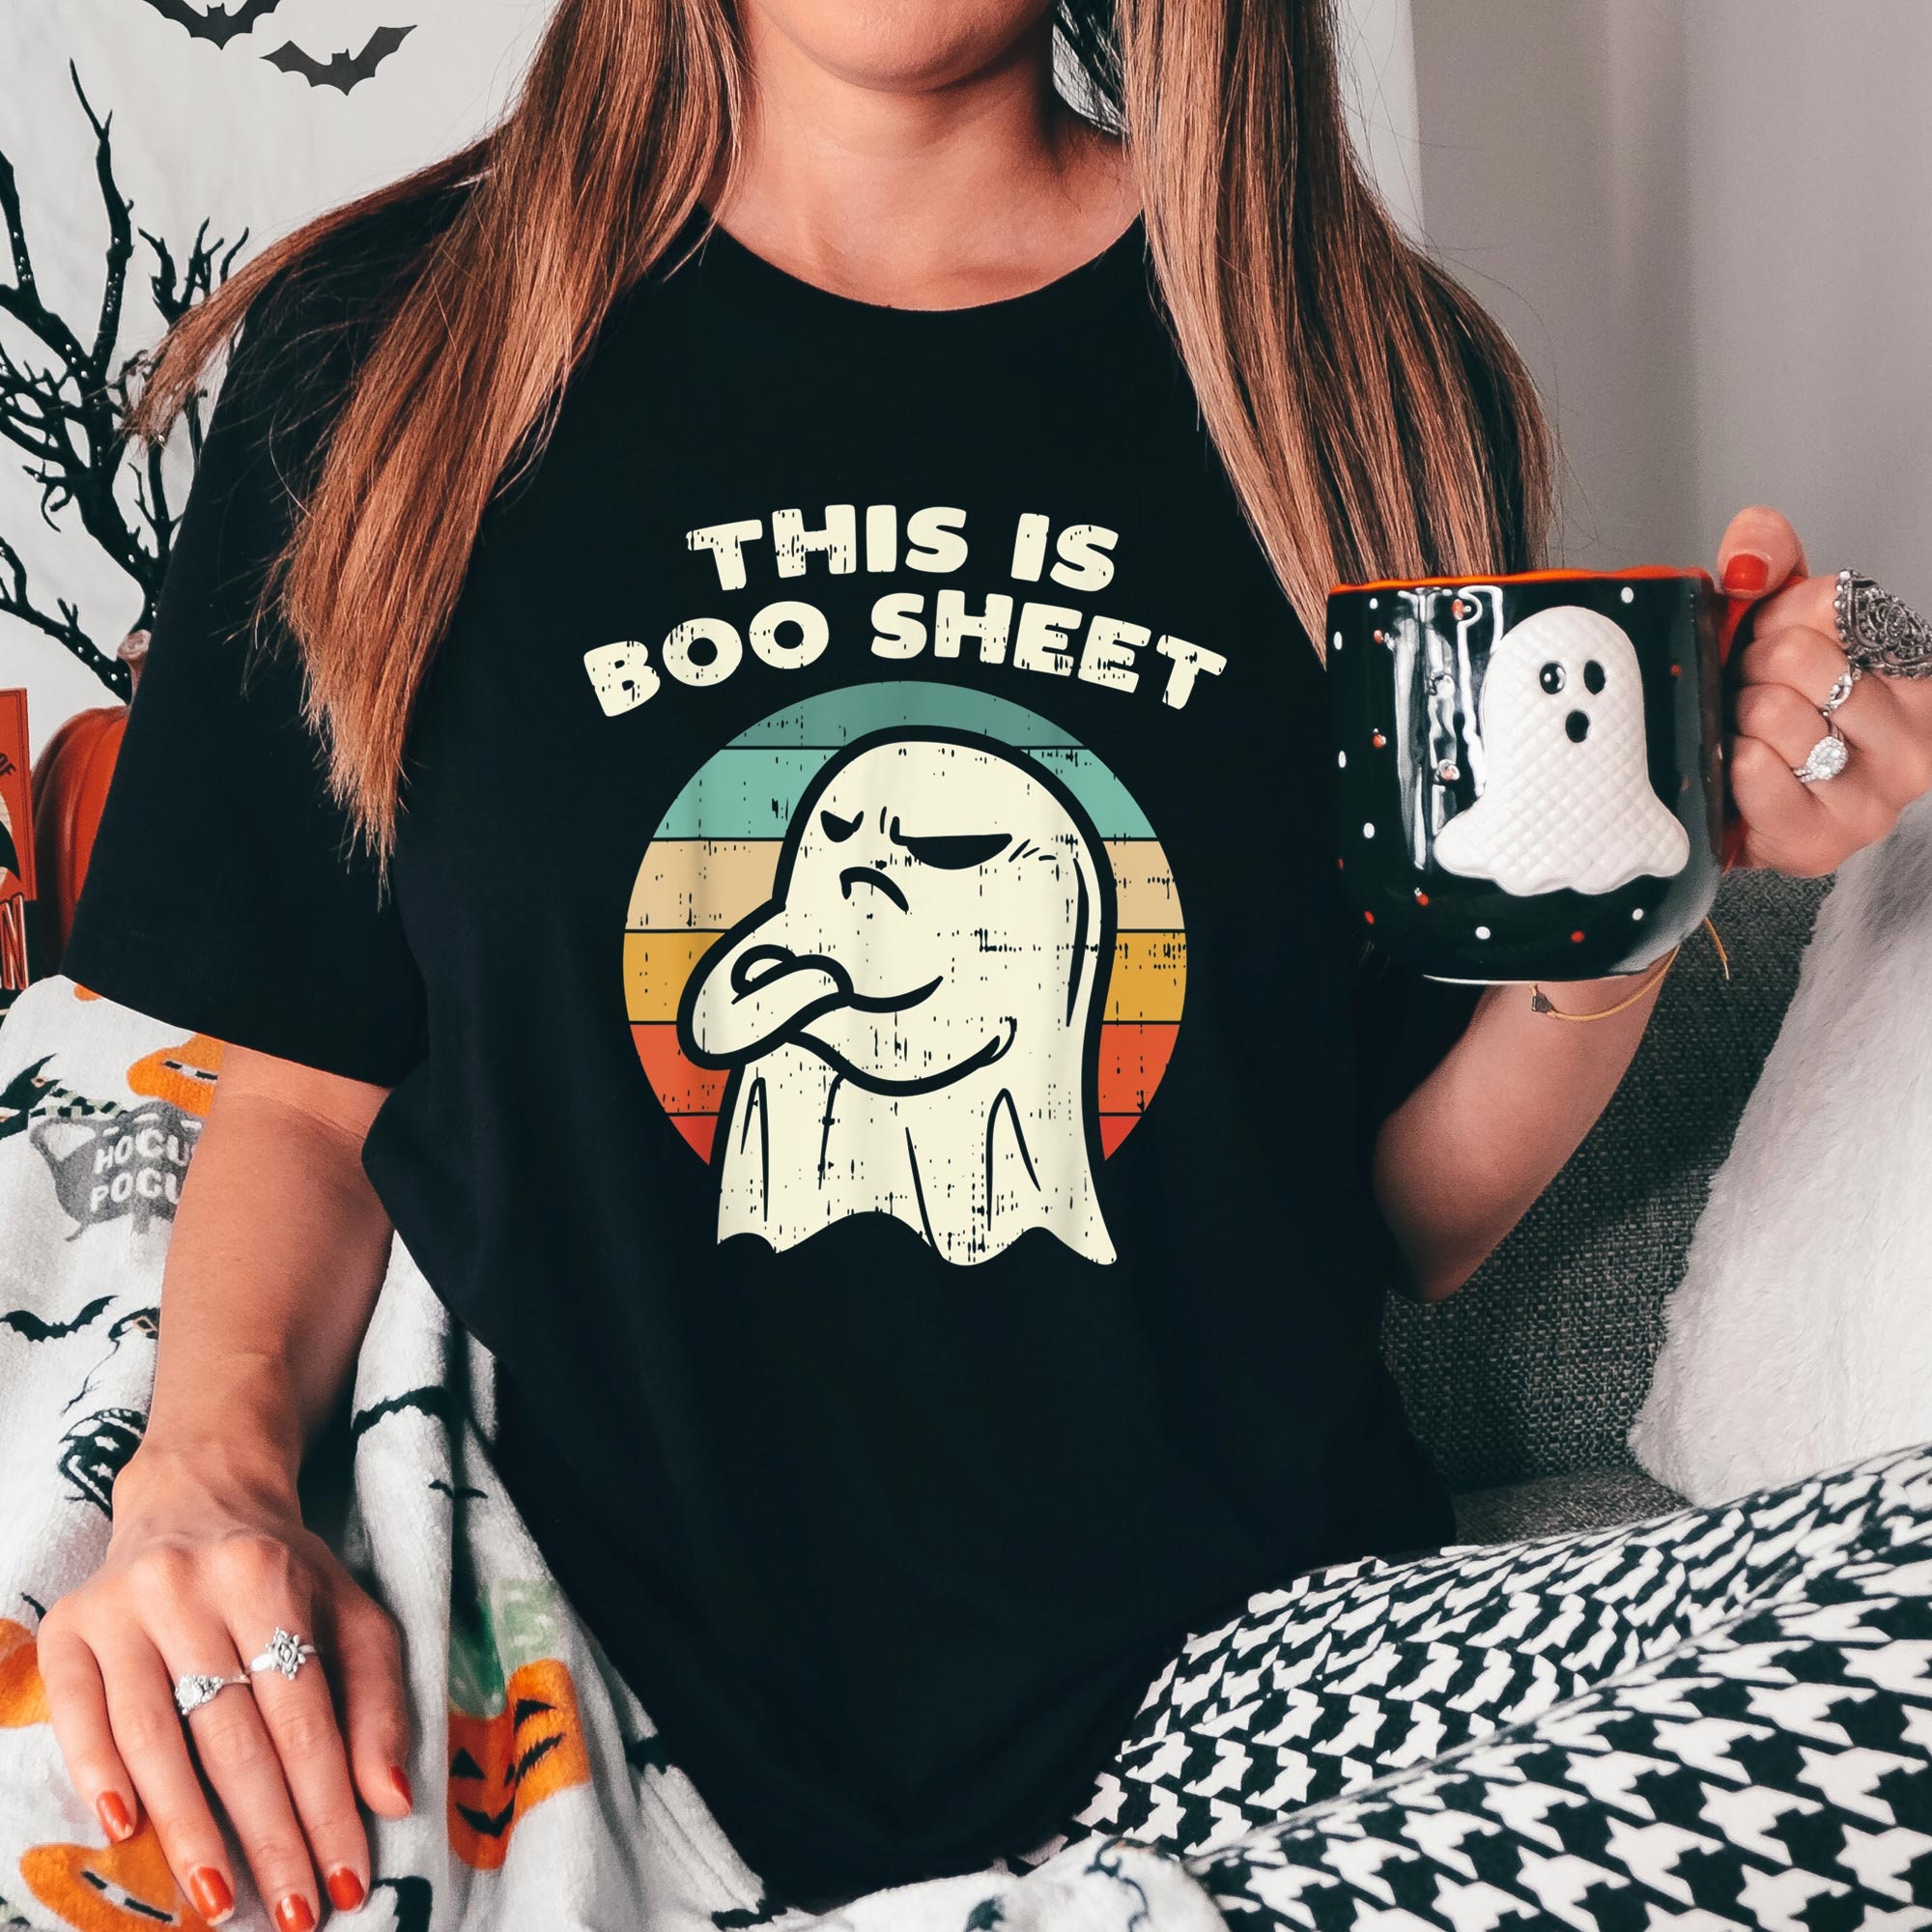 Boo T-shirt, Sheet This Shirt, T-shirt, Shirt Halloween Halloween Halloween Sleeve Boo Sheet - Sheet Etsy Boo Short Retro is Shirt, Shirt,